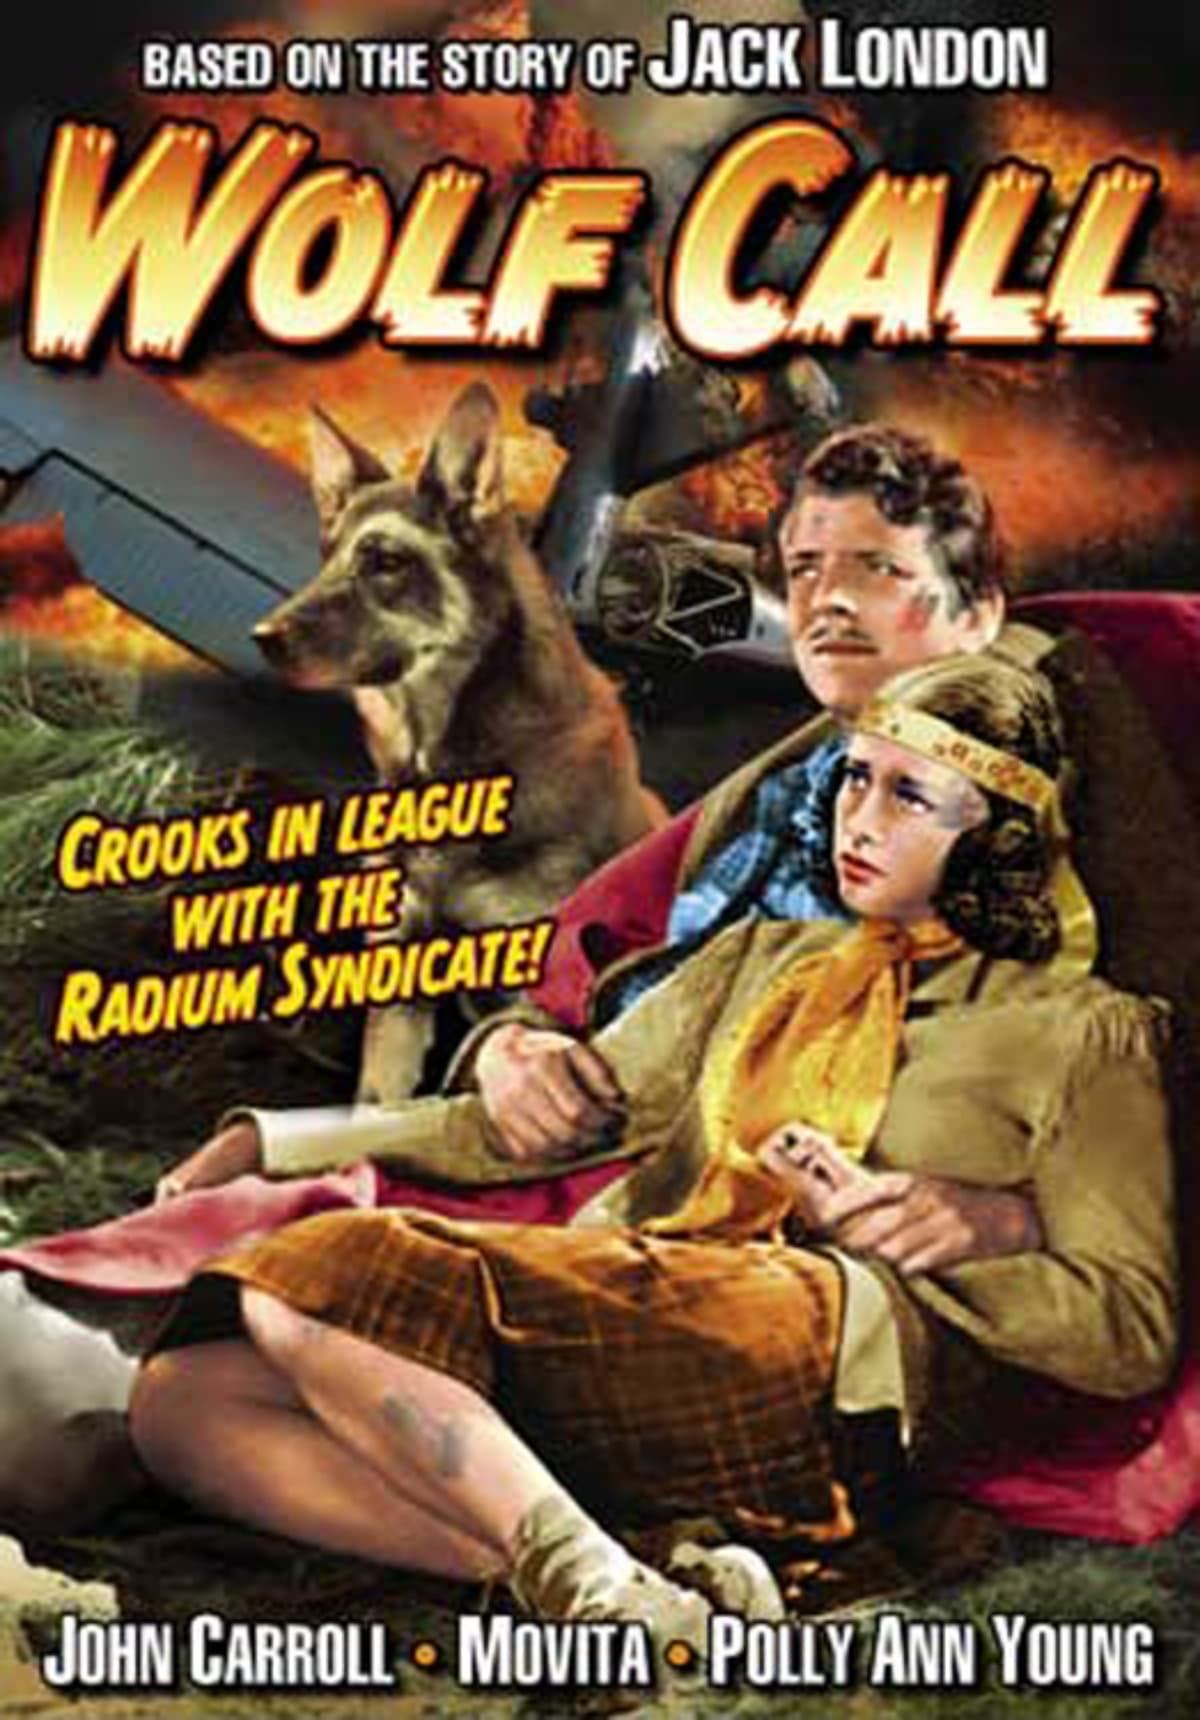 Wolf Call